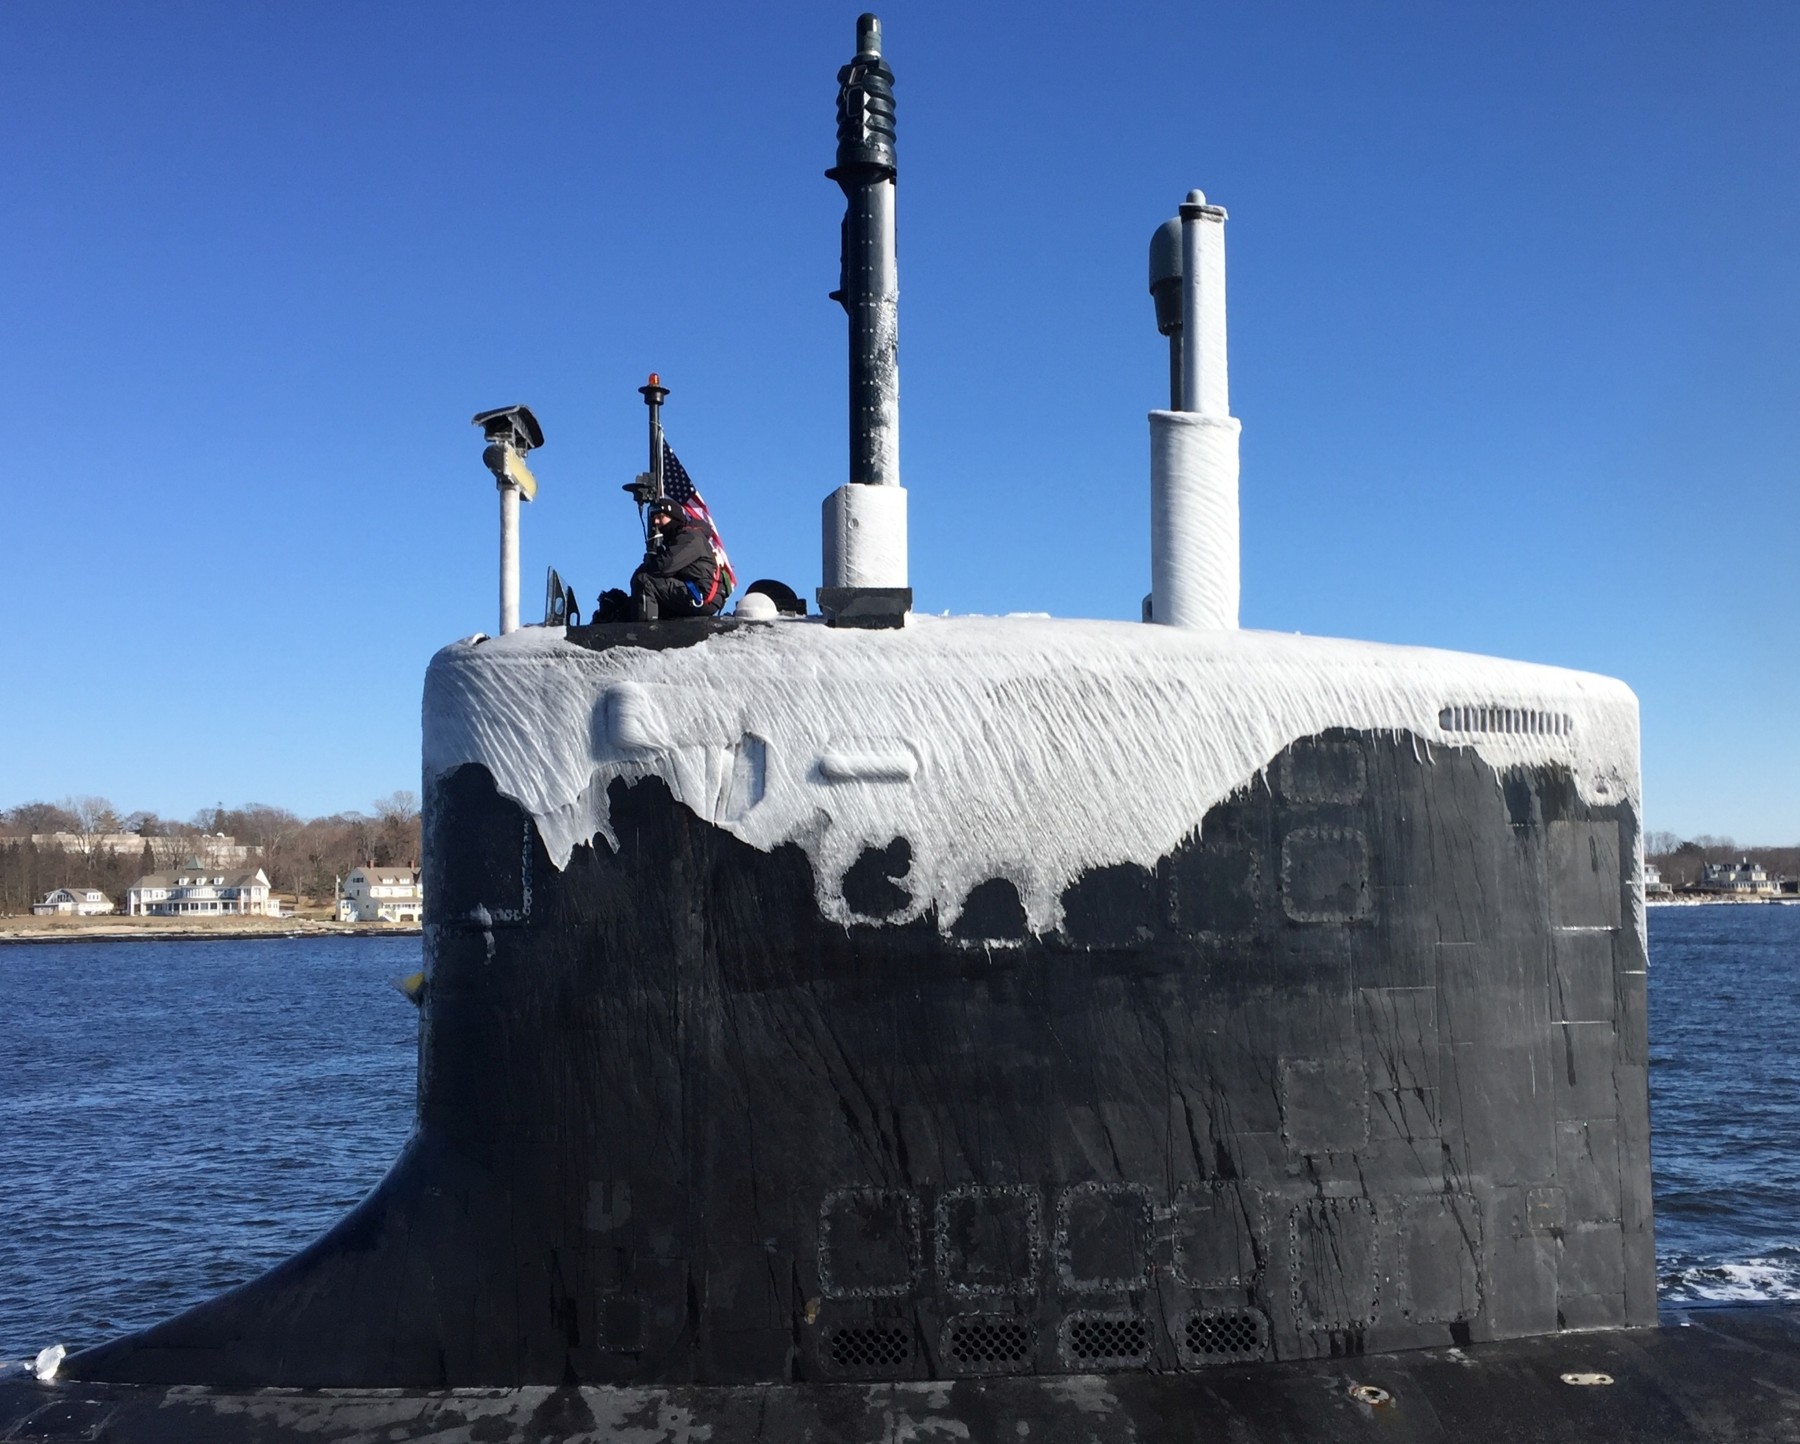 ssn-784 uss north dakota virginia class attack submarine us navy 22